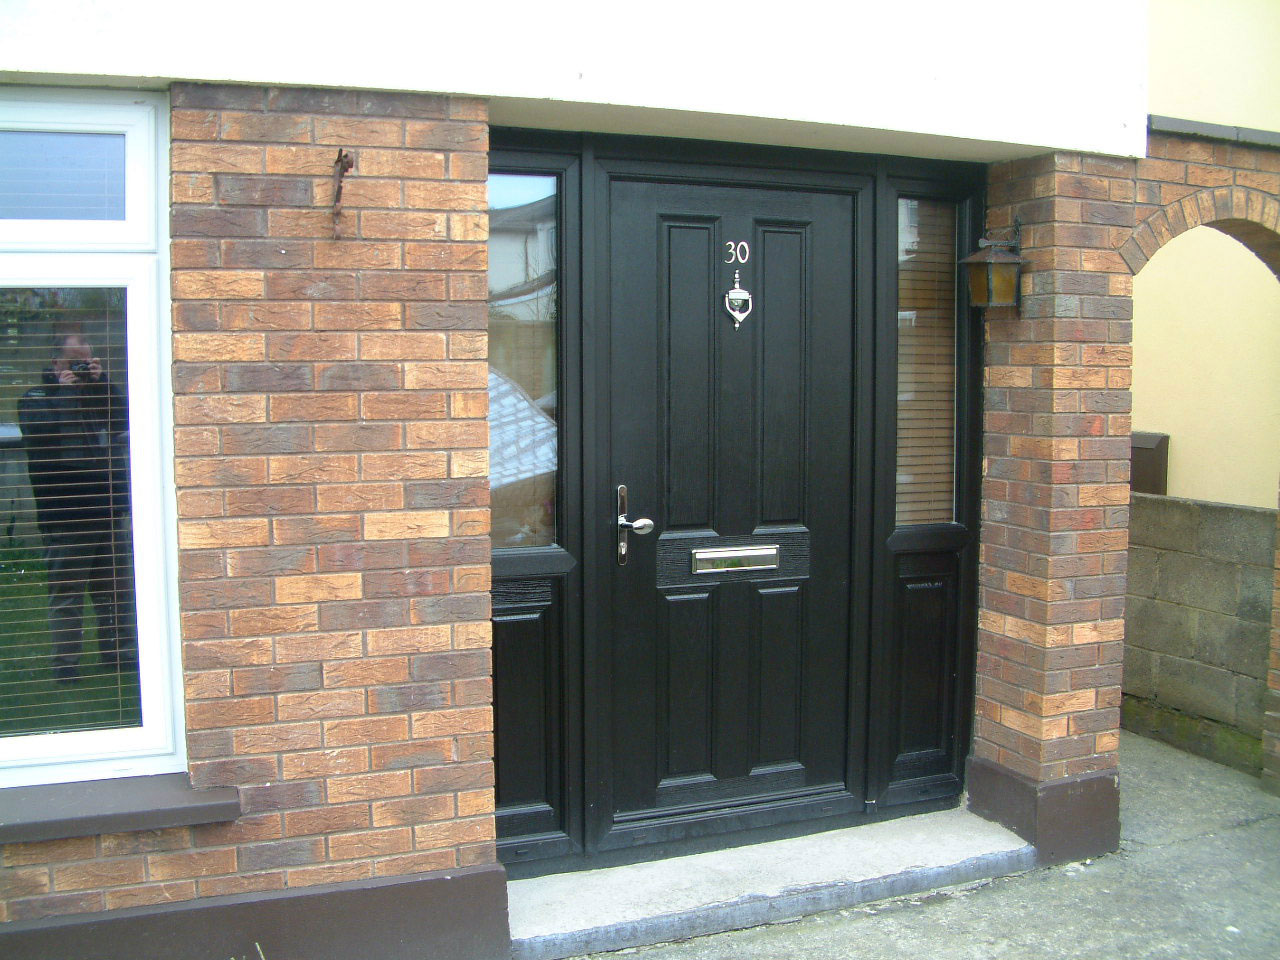 BLACK APEER APM1 COMPOSITE FRONT DOOR FITTED BY ASGARD WINDOWS IN DUBLIN 15.